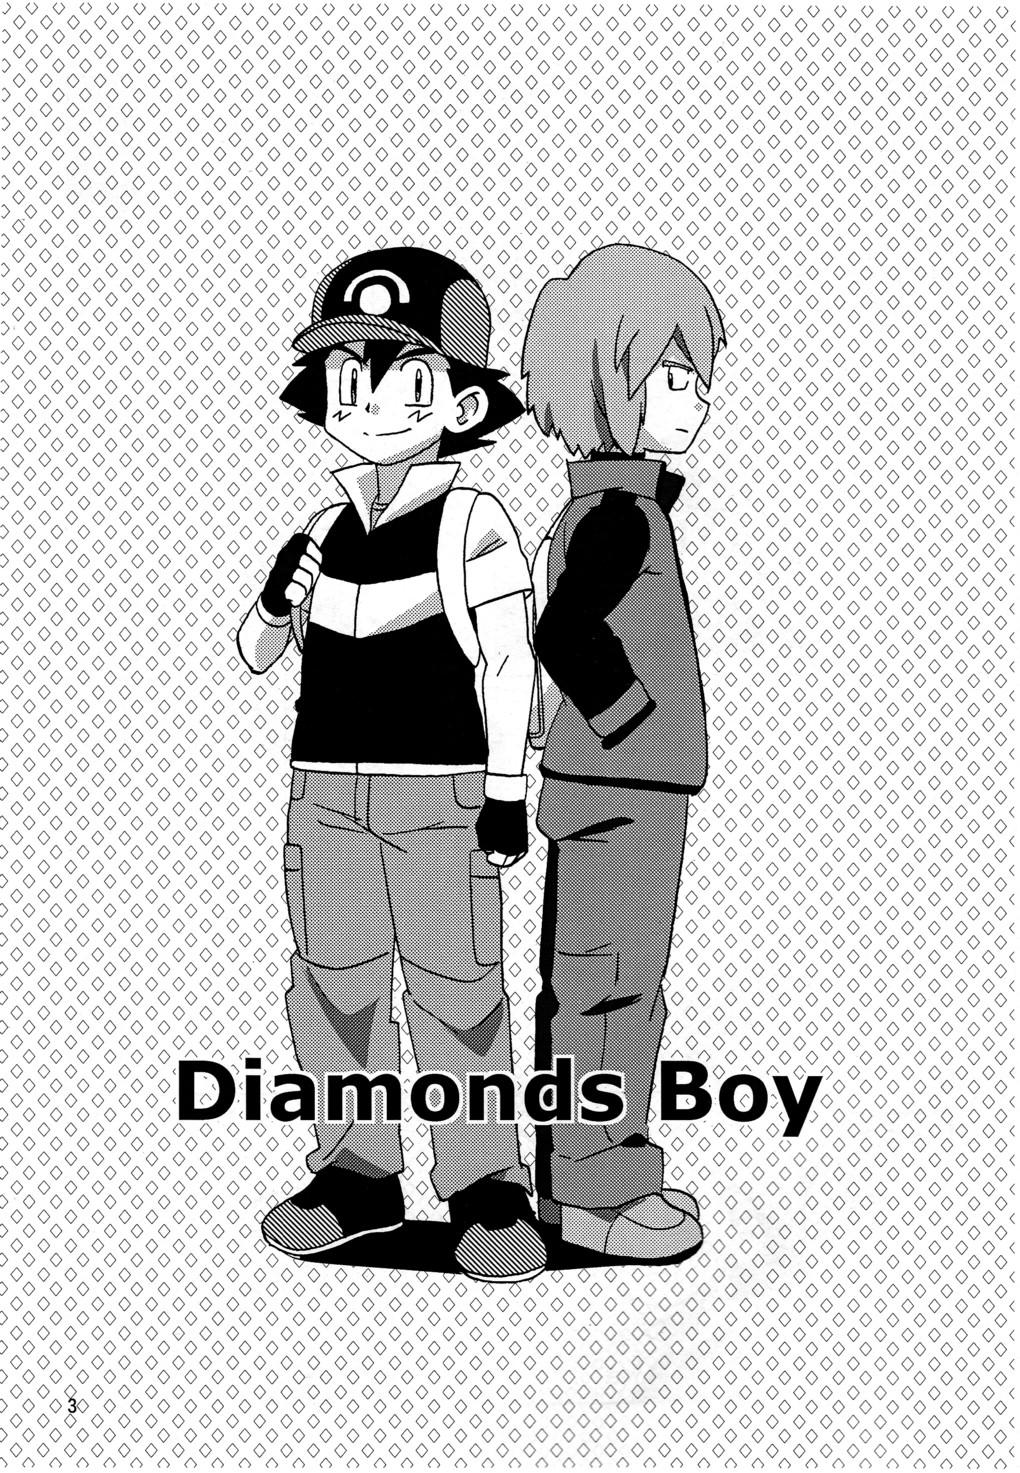 DIAMONDS BOY 2